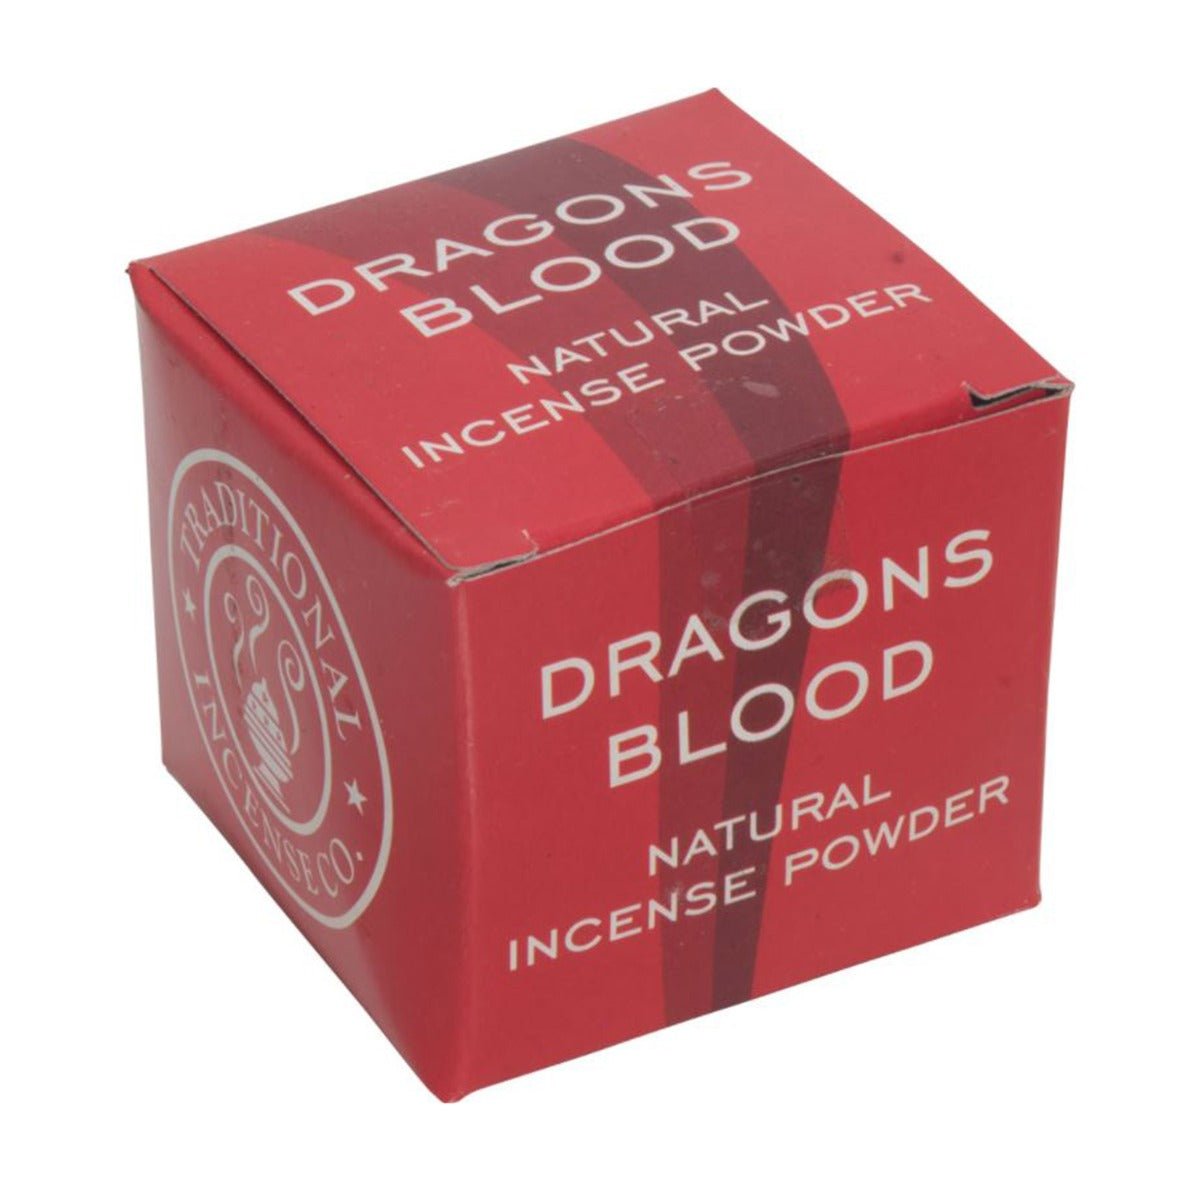 Dragons Blood Powder Incense - 13 Moons